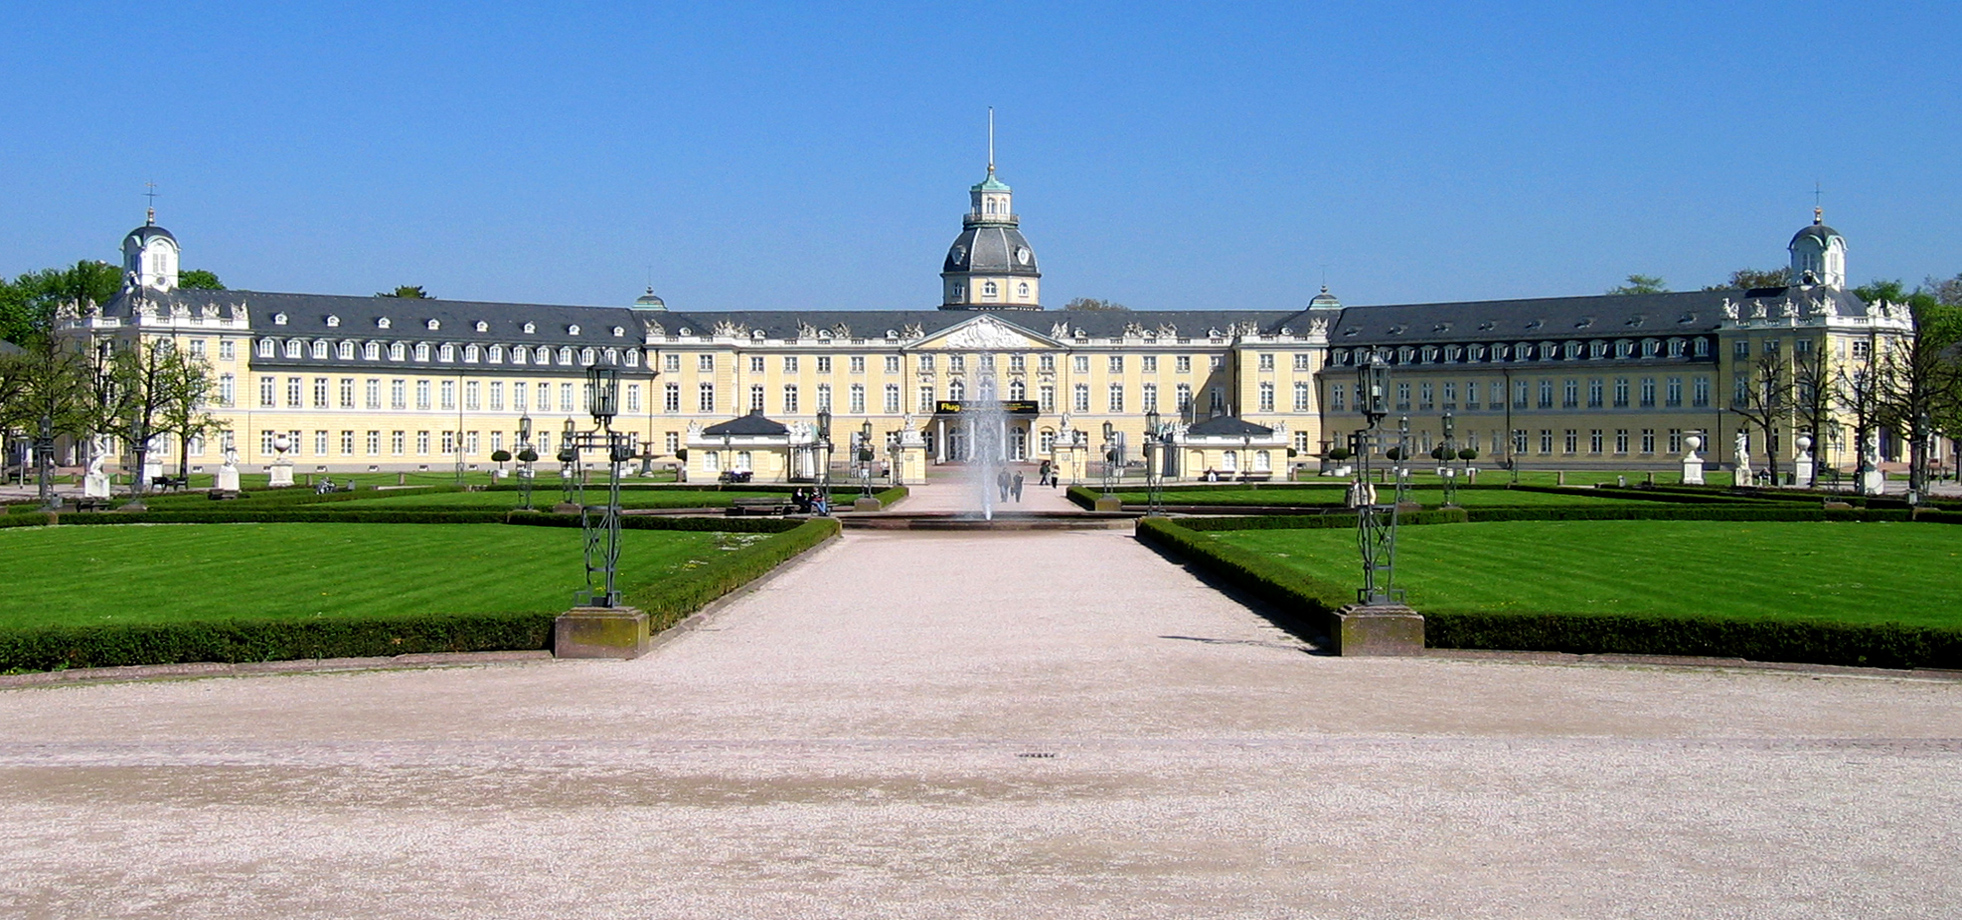 Karlsruhe-castle